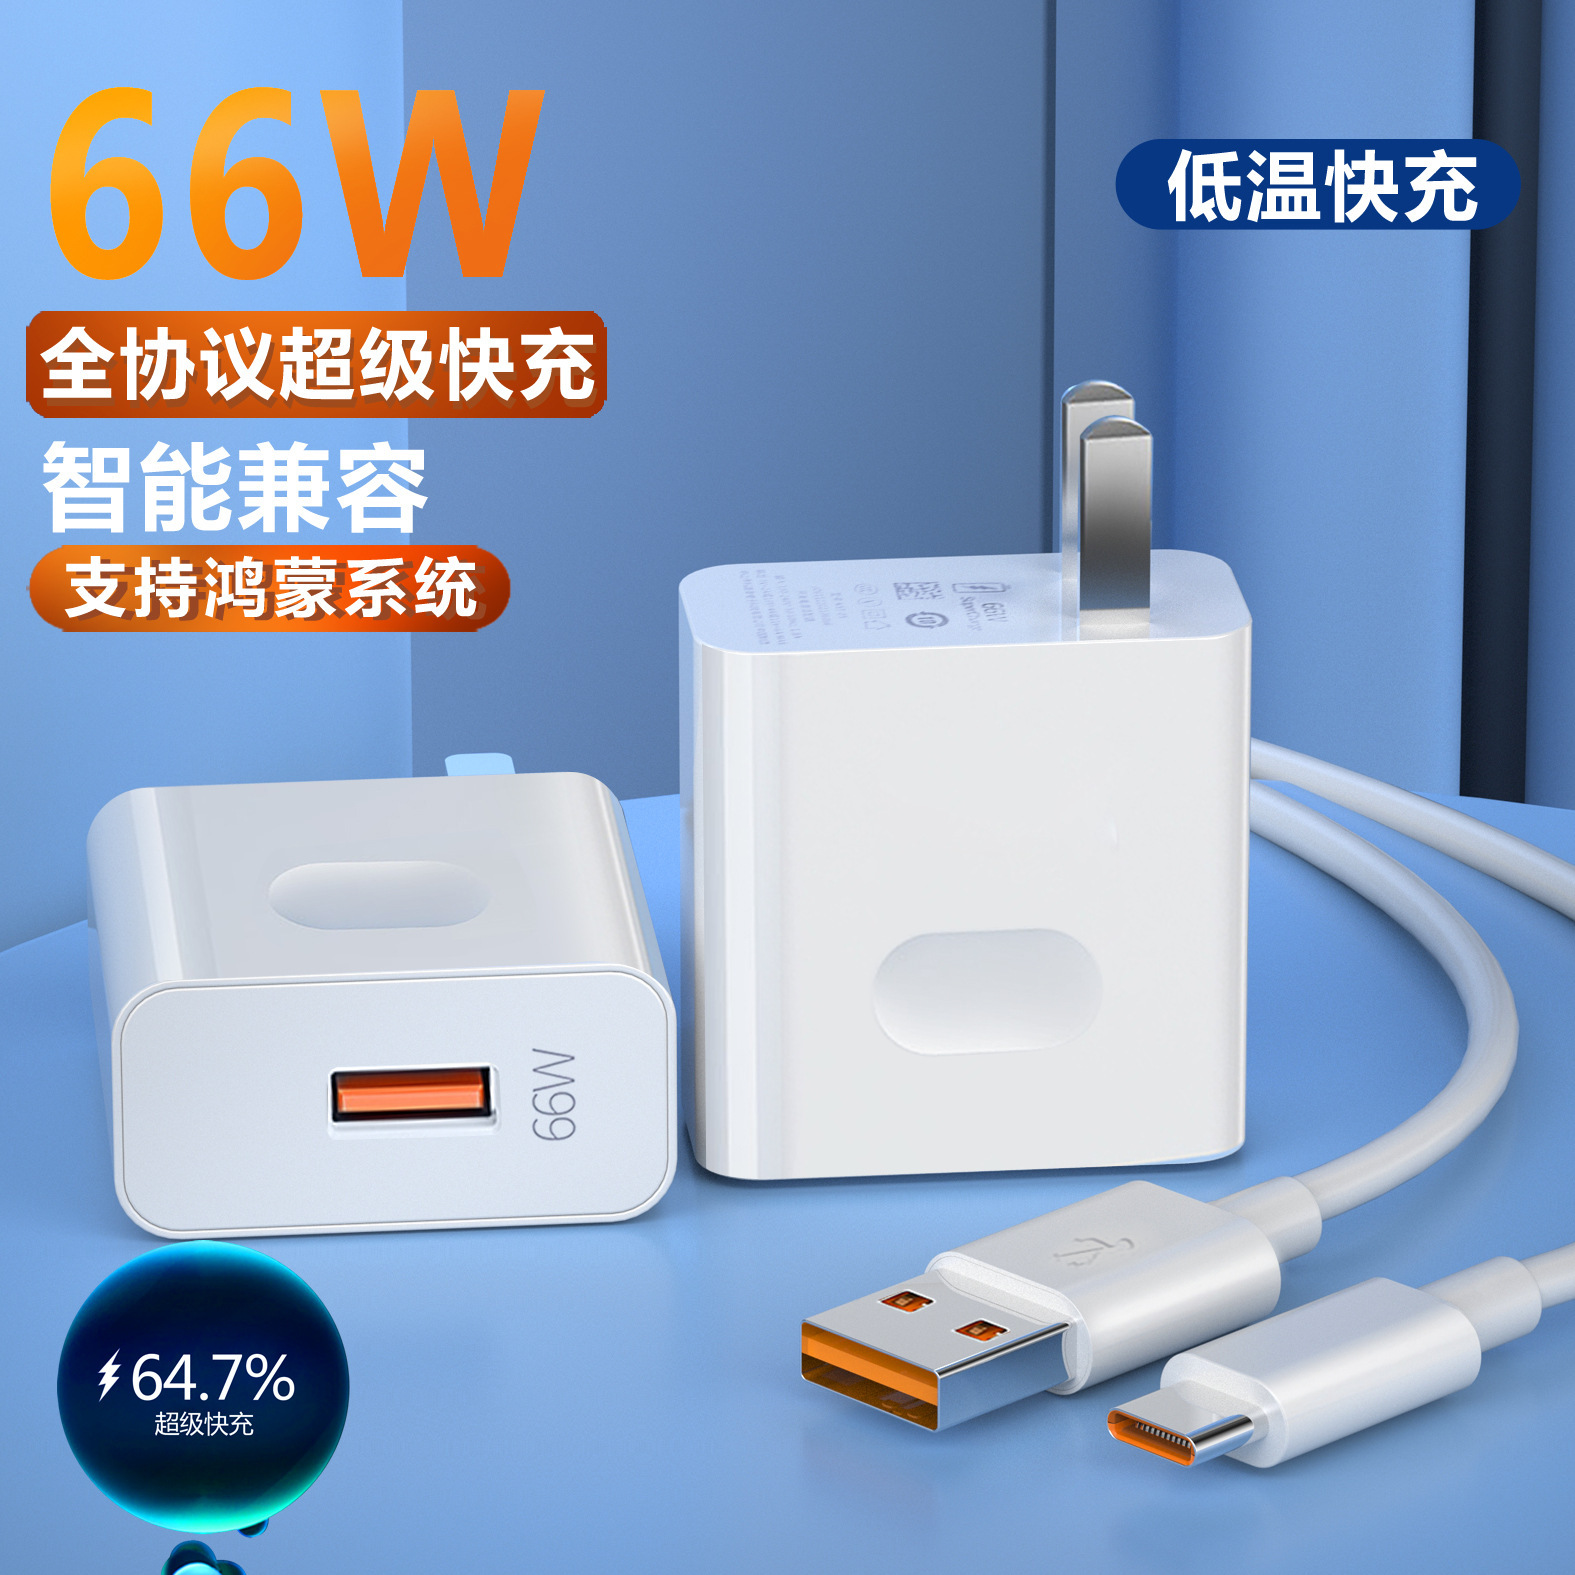 66W超级快充头 适用华为/荣耀手机6A数据线mate60全兼容3C充电器